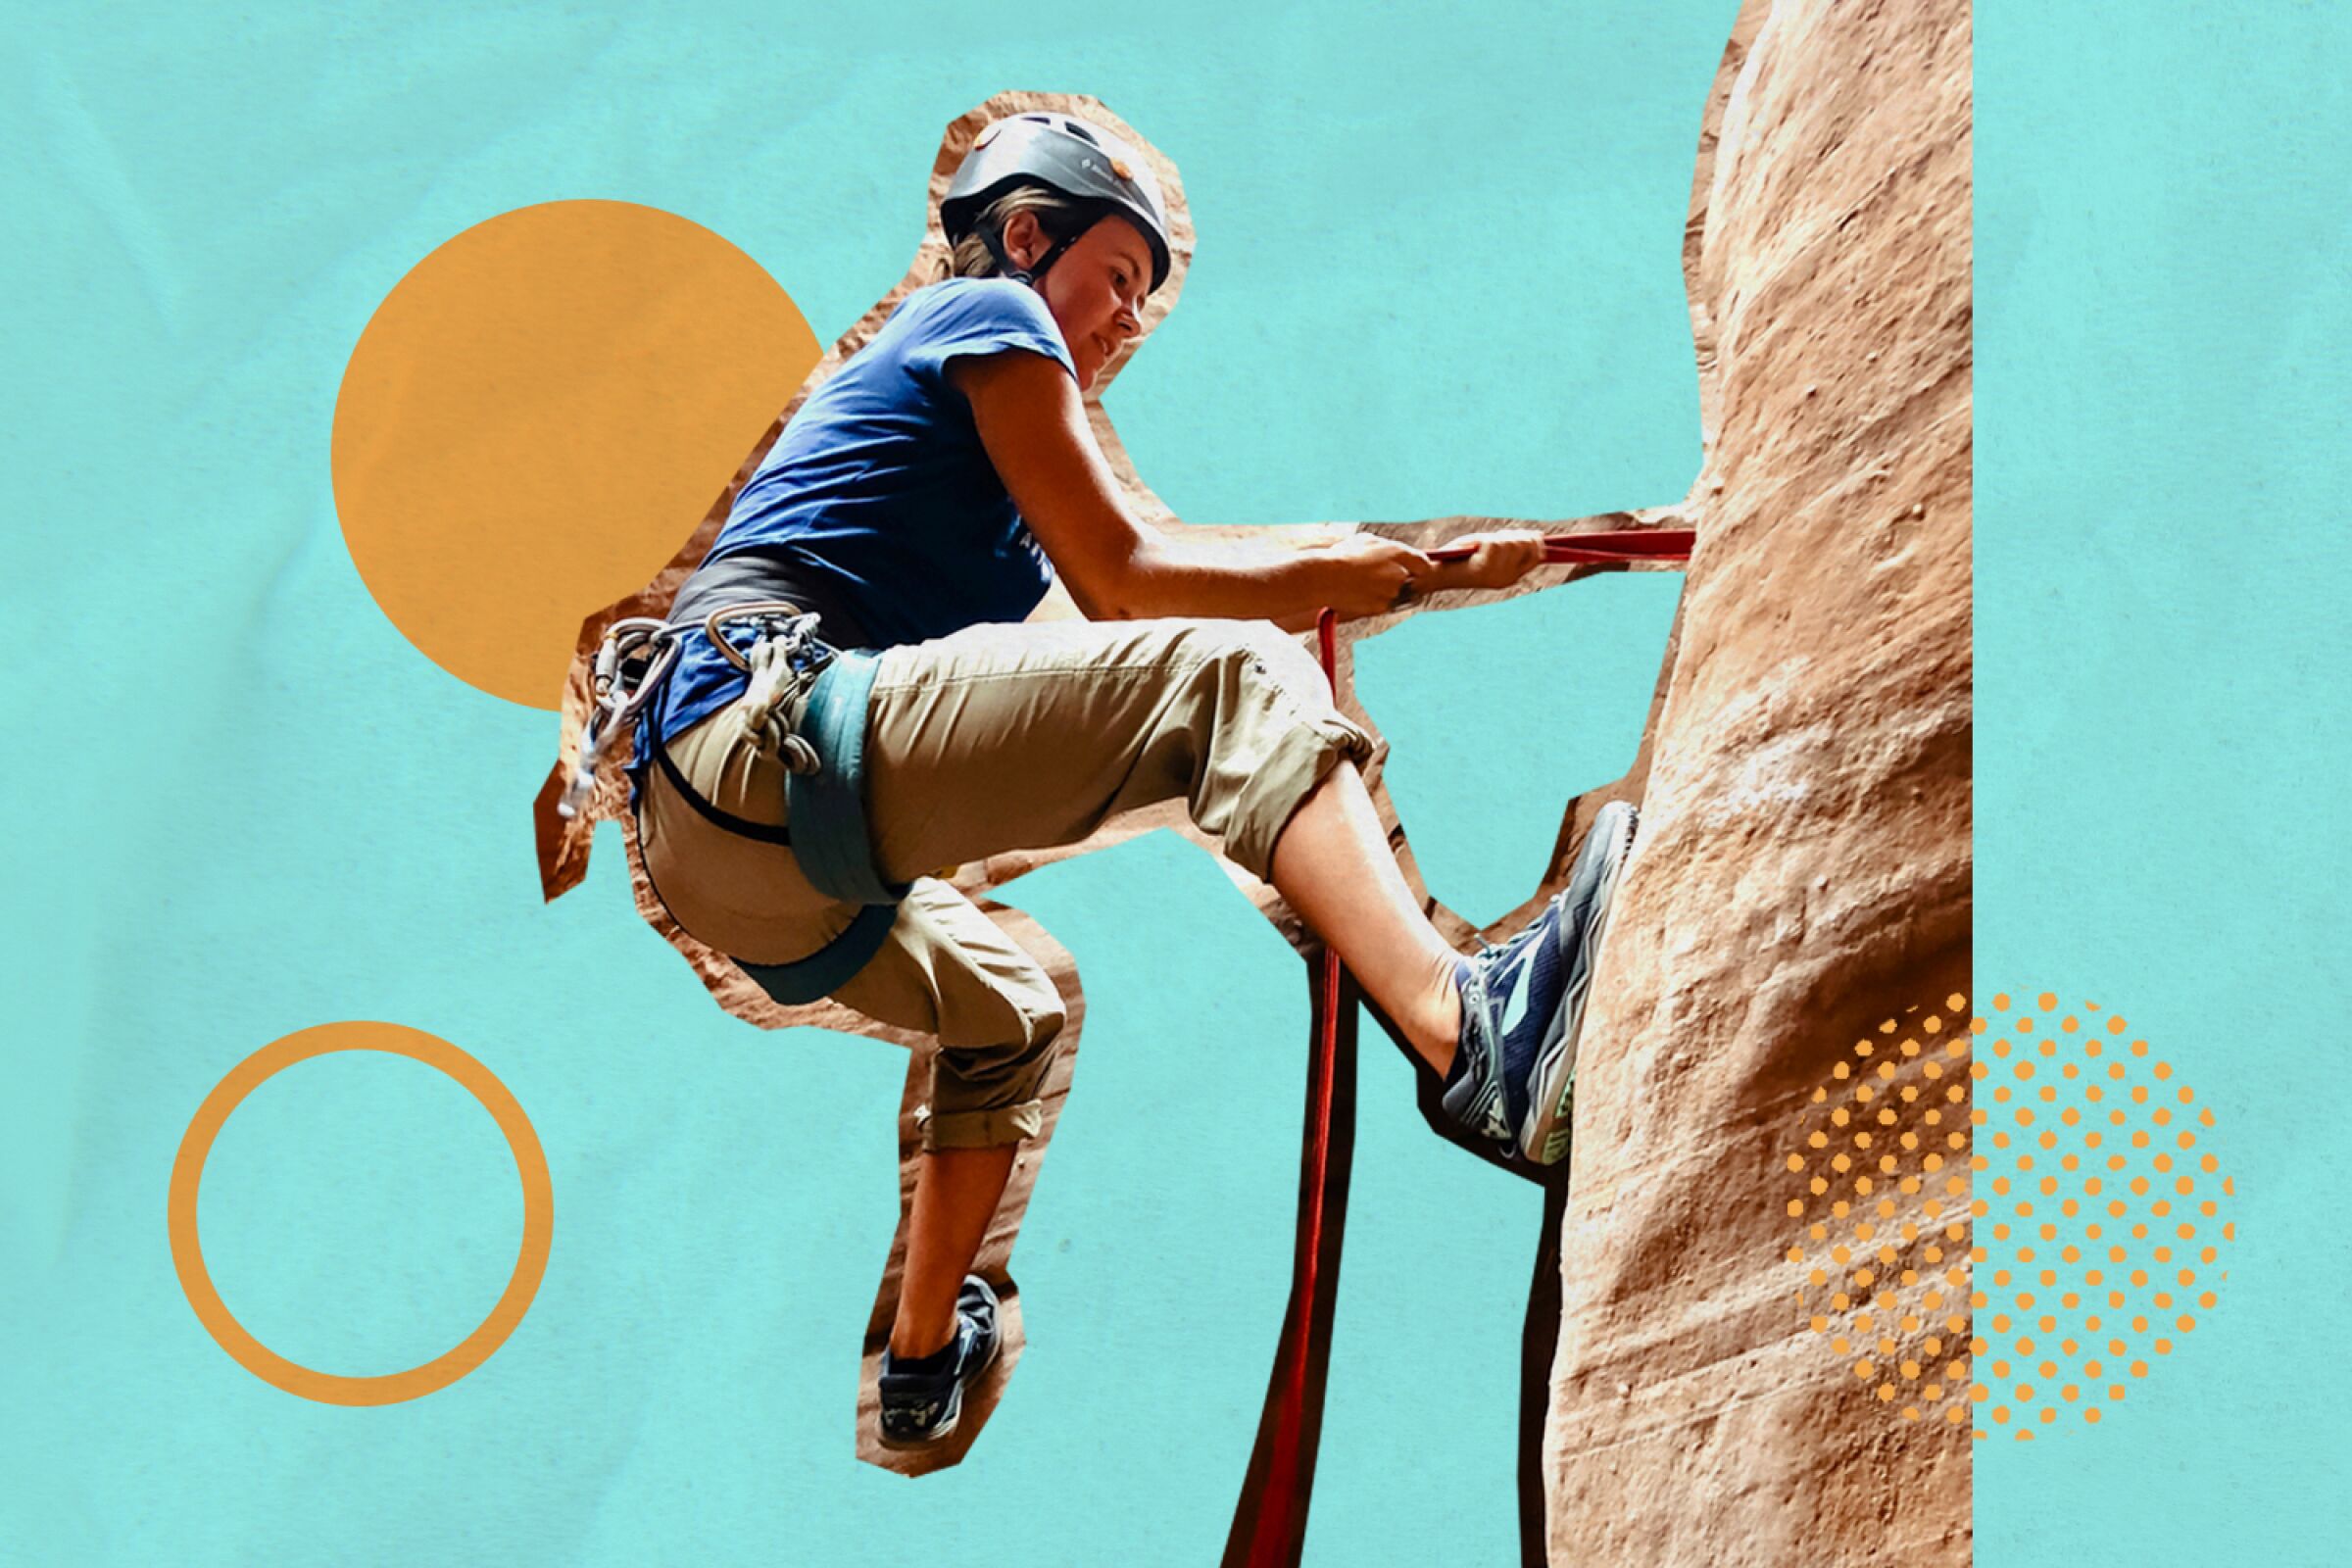 A woman climbs a canyon wall